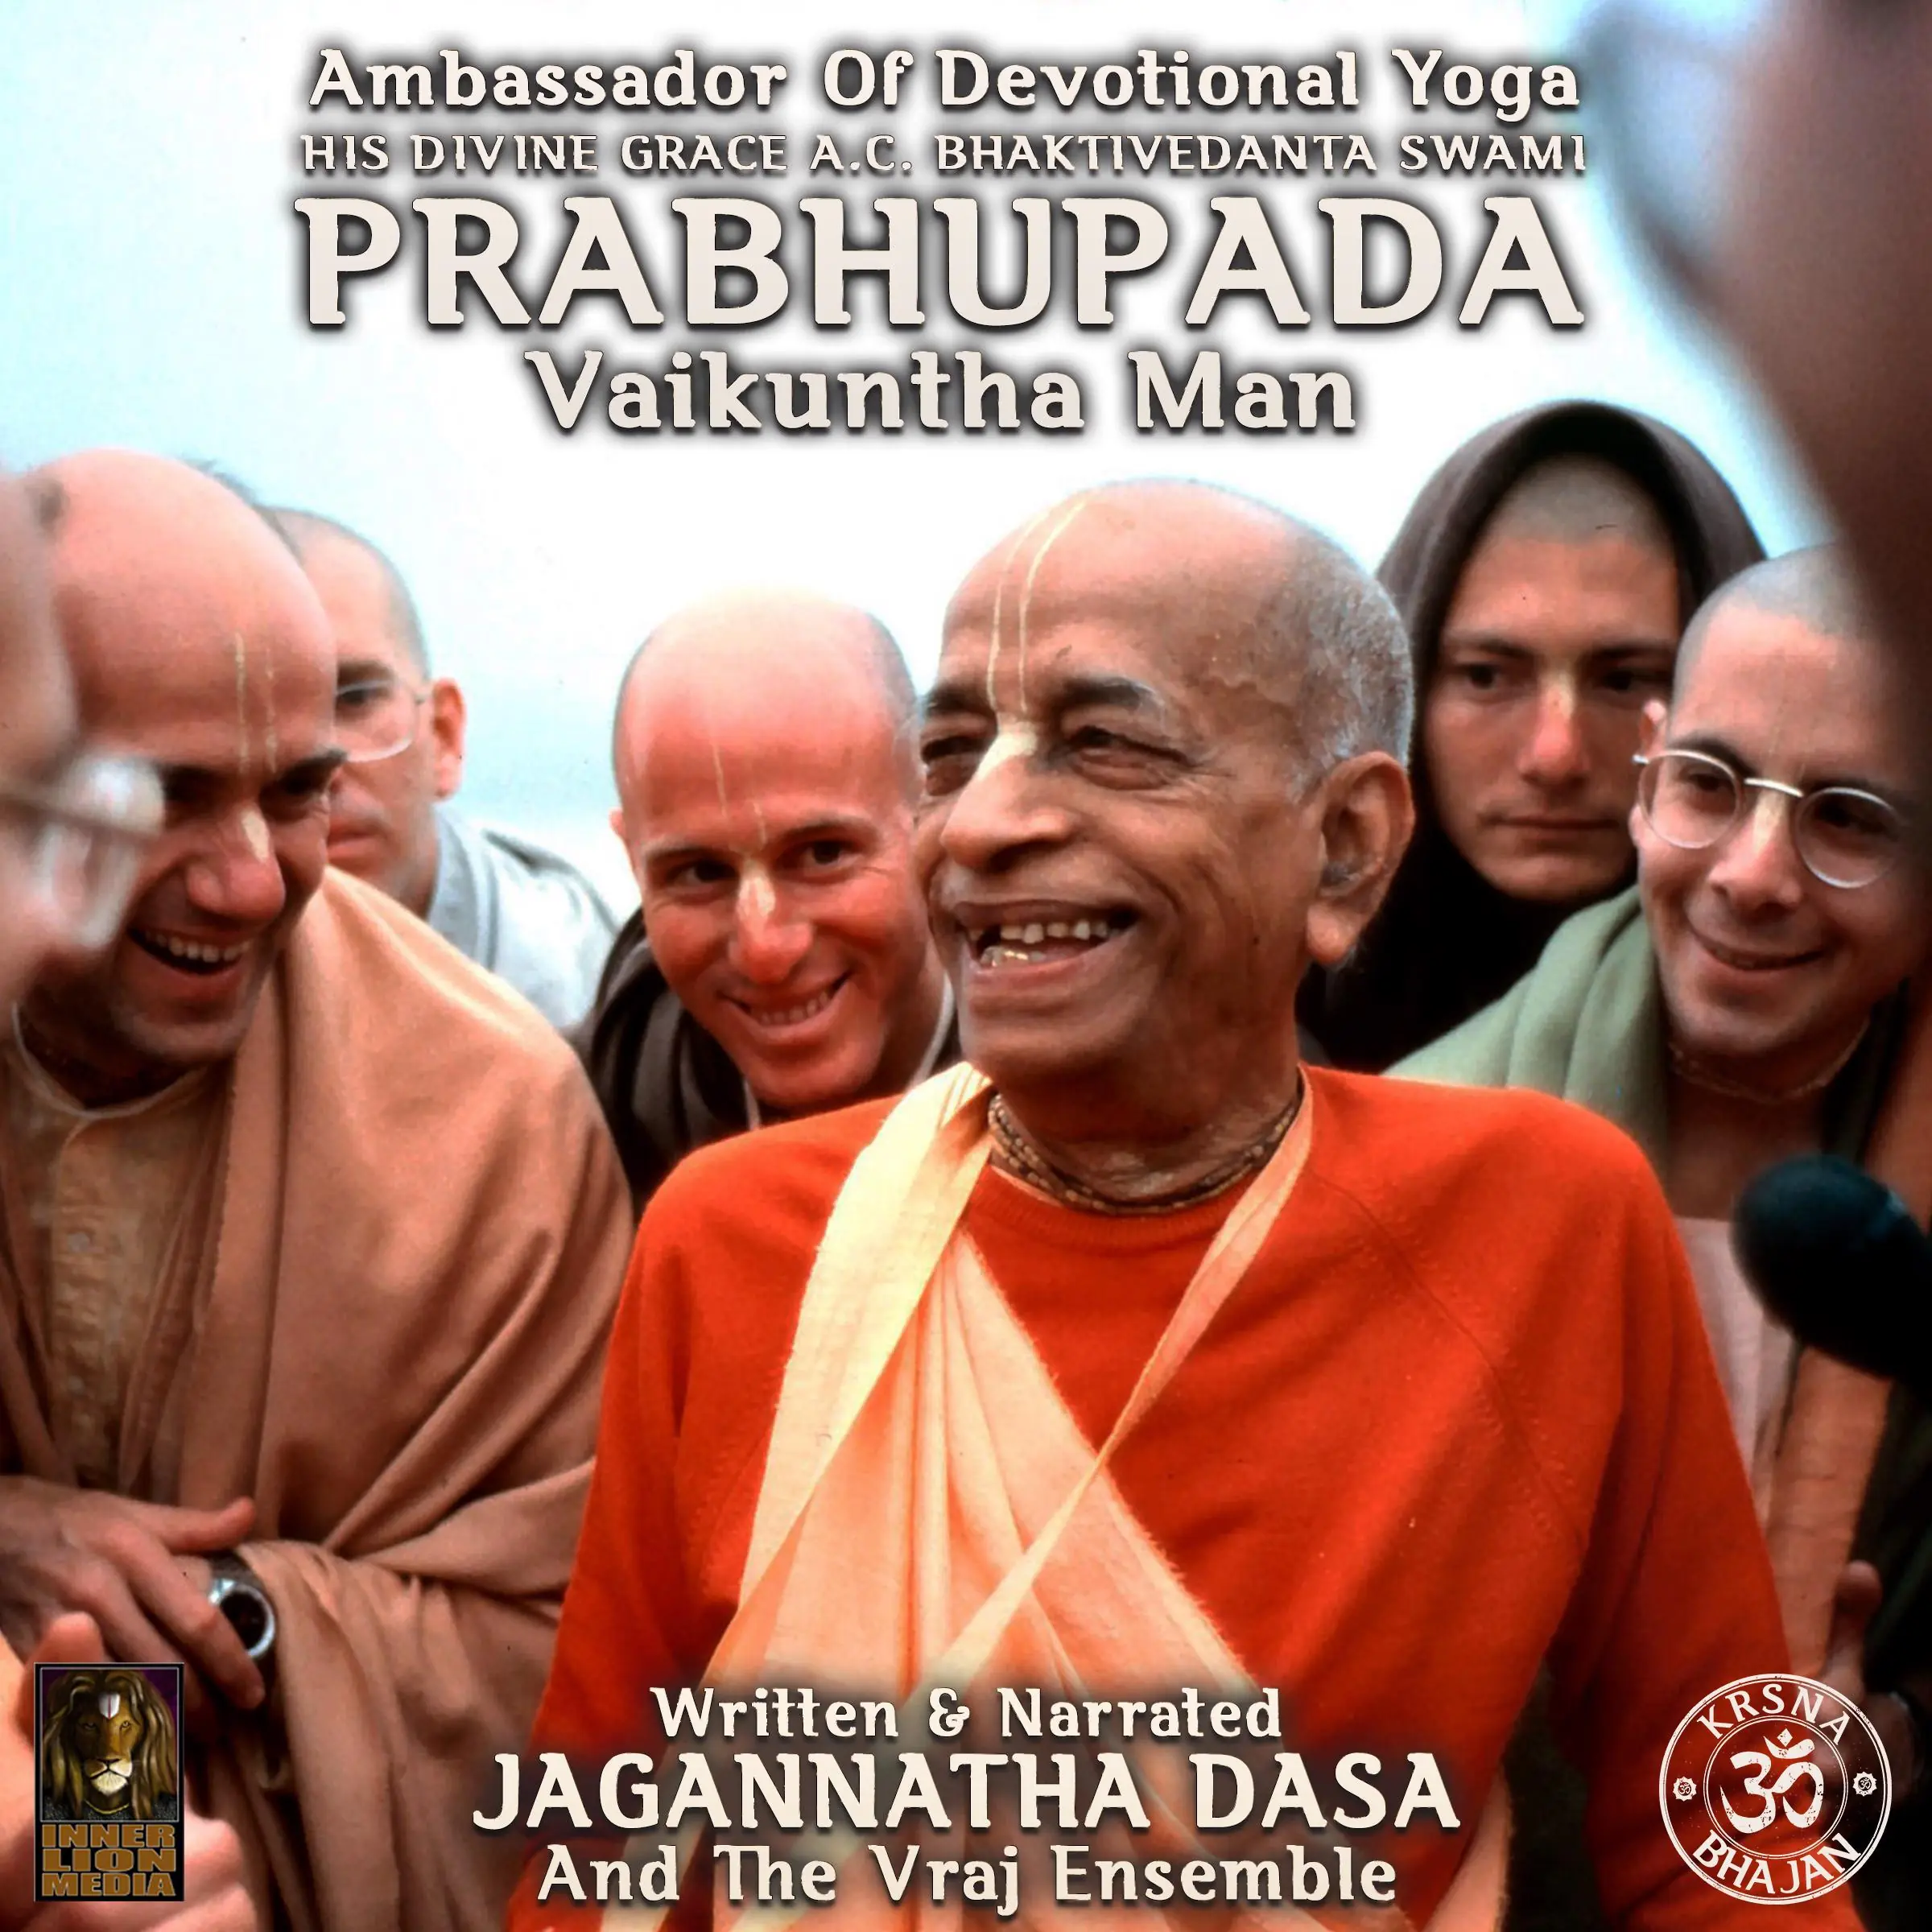 Ambassador Of Devotional Yoga His Divine Grace A.C. Bhaktivedanta Swami Prabhupada Vaikuntha Man Audiobook by Jagannatha Dasa And The Vraj Ensemble